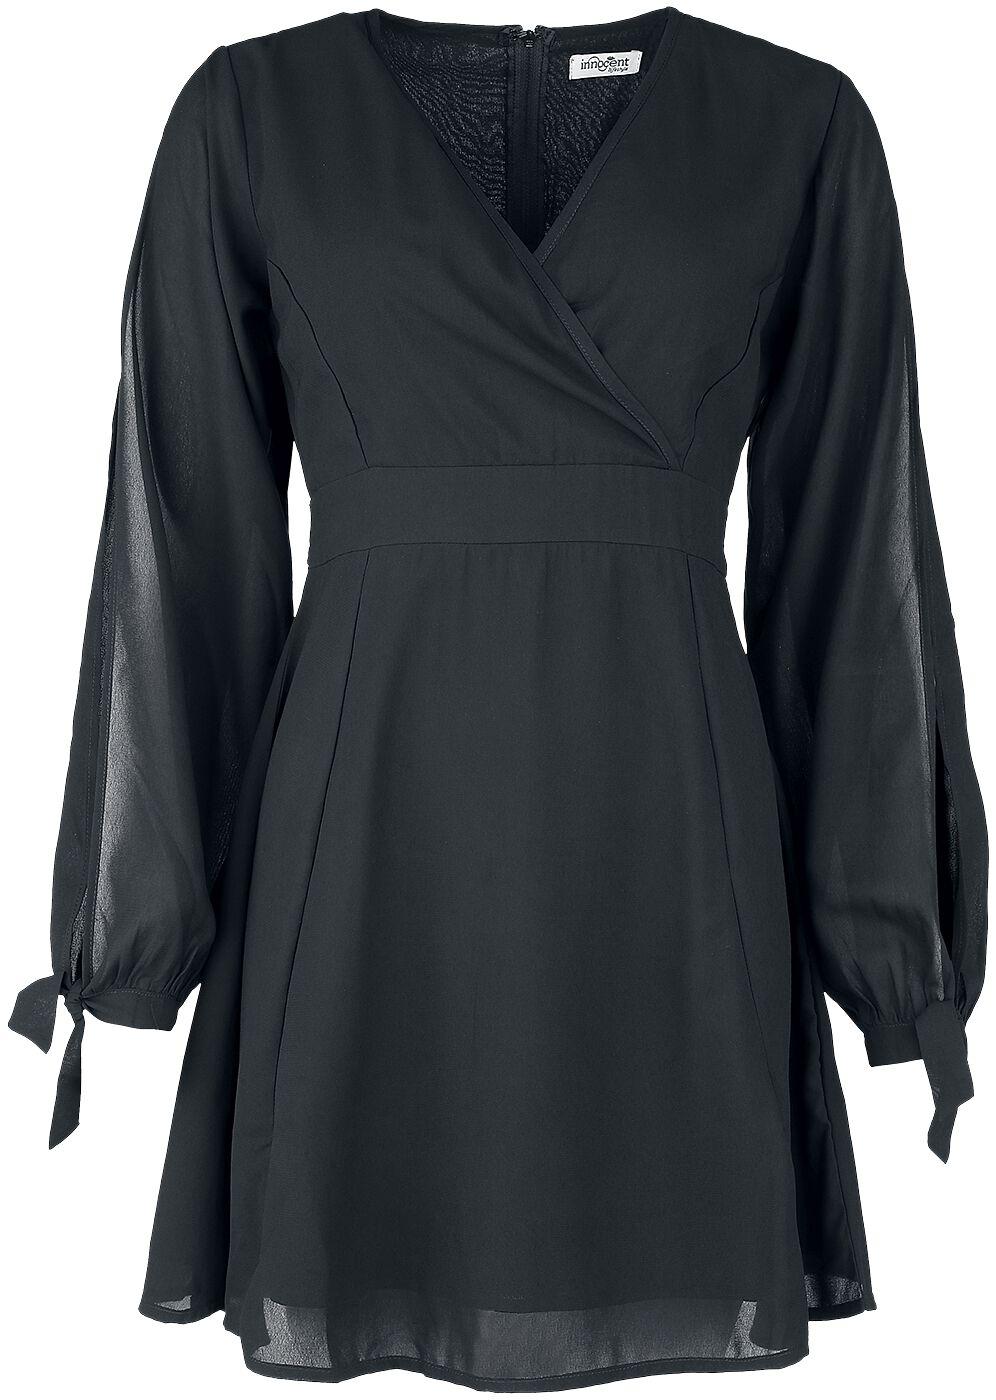 Innocent Opal Dress Kurzes Kleid schwarz in XL